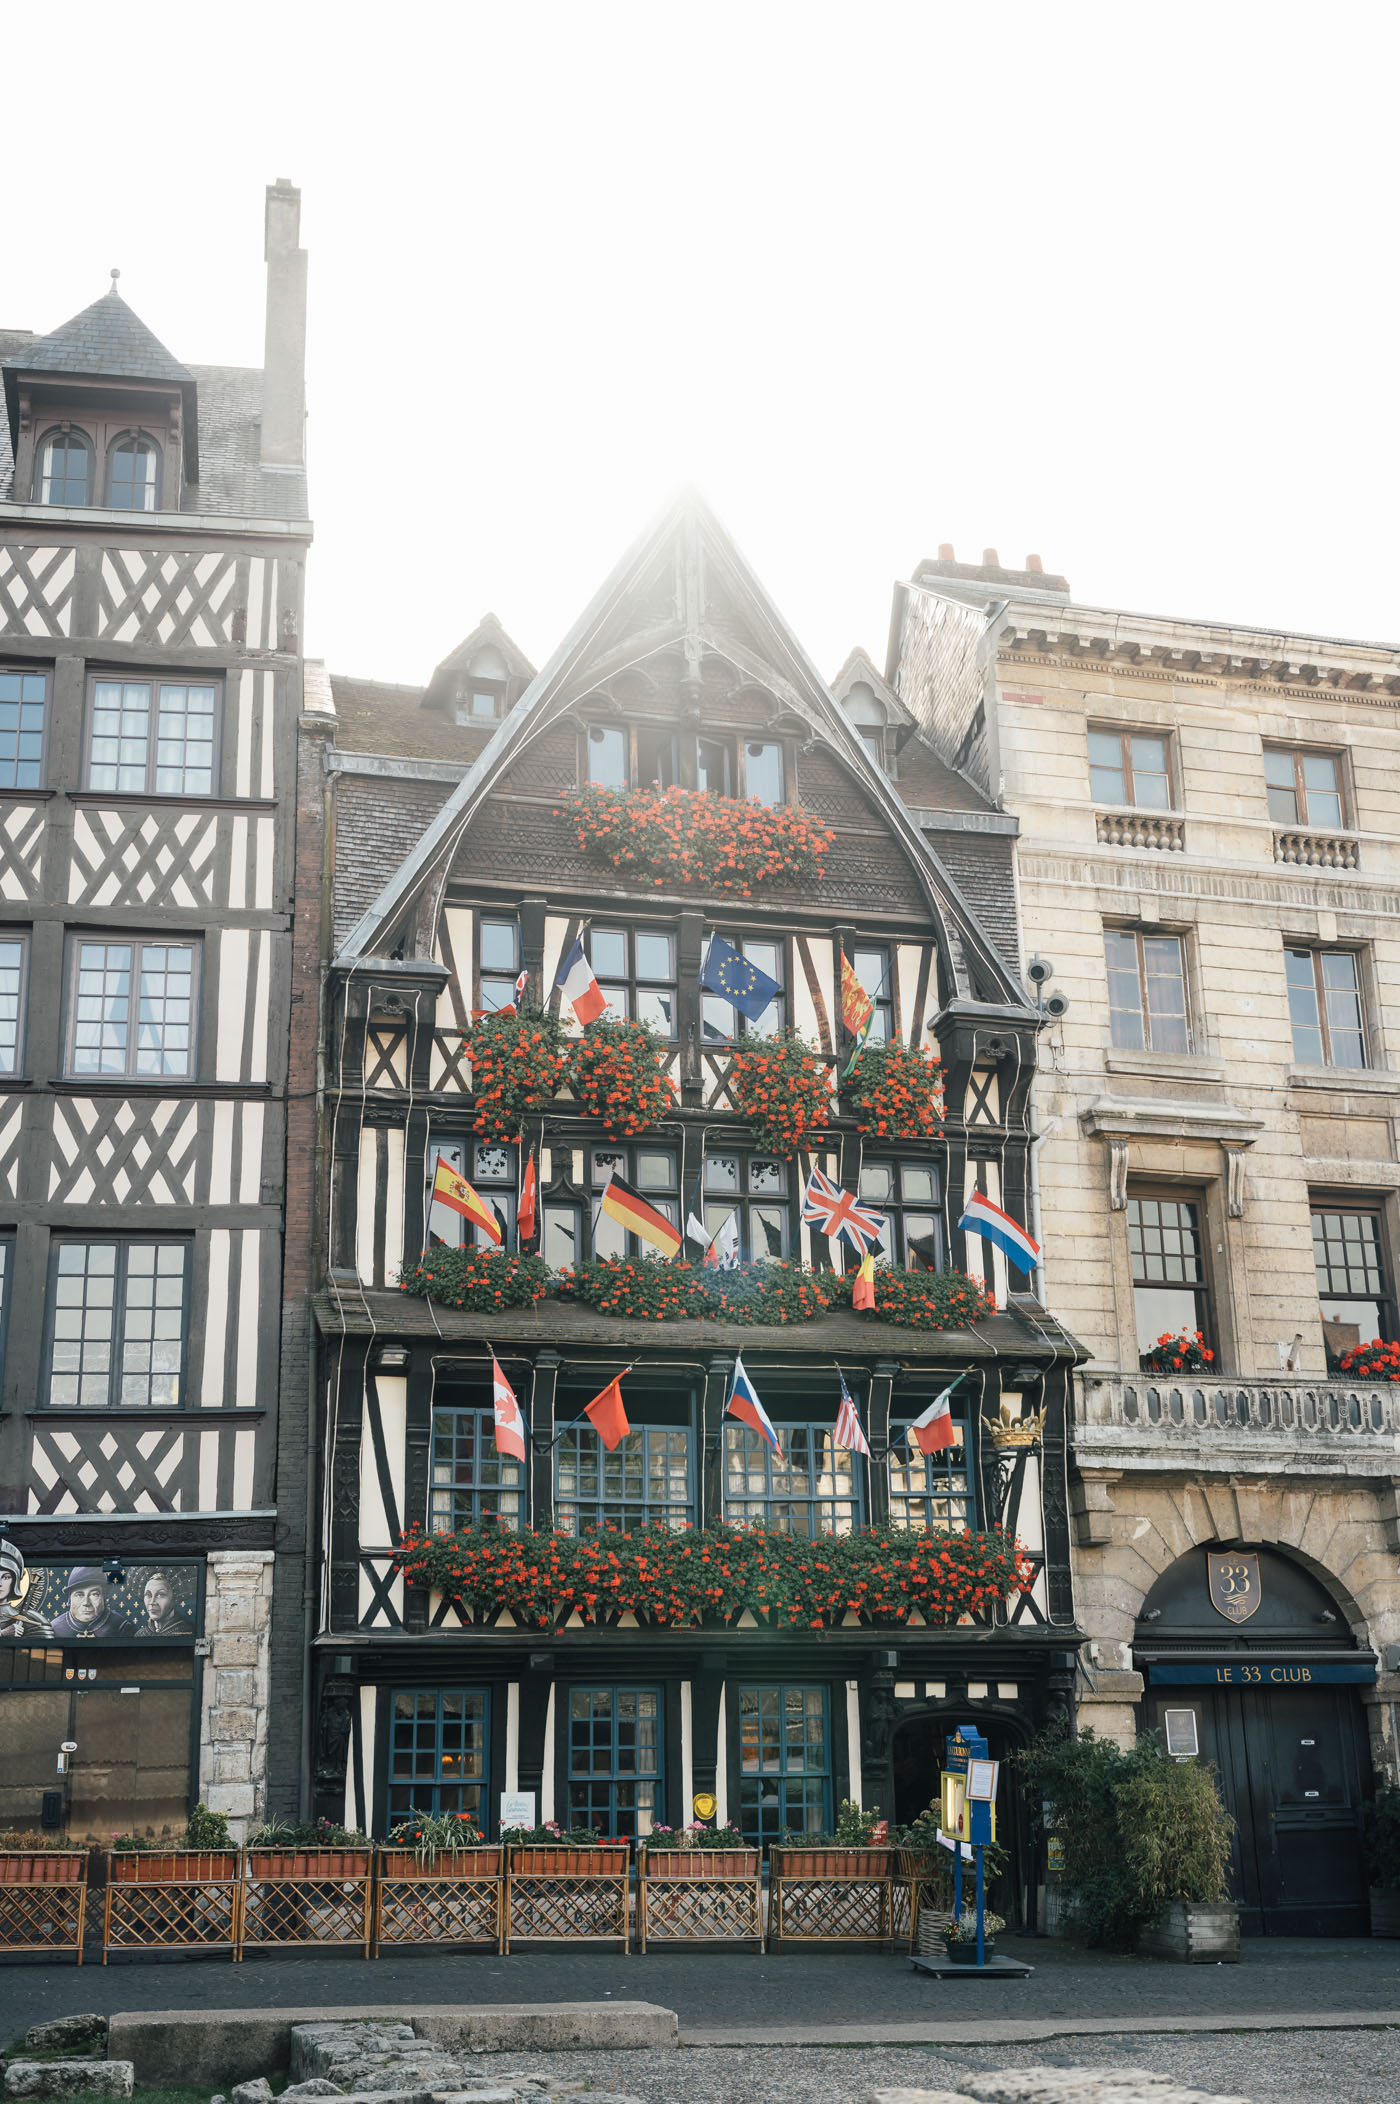 France's oldest inn La Couronne in Rouen Normandy